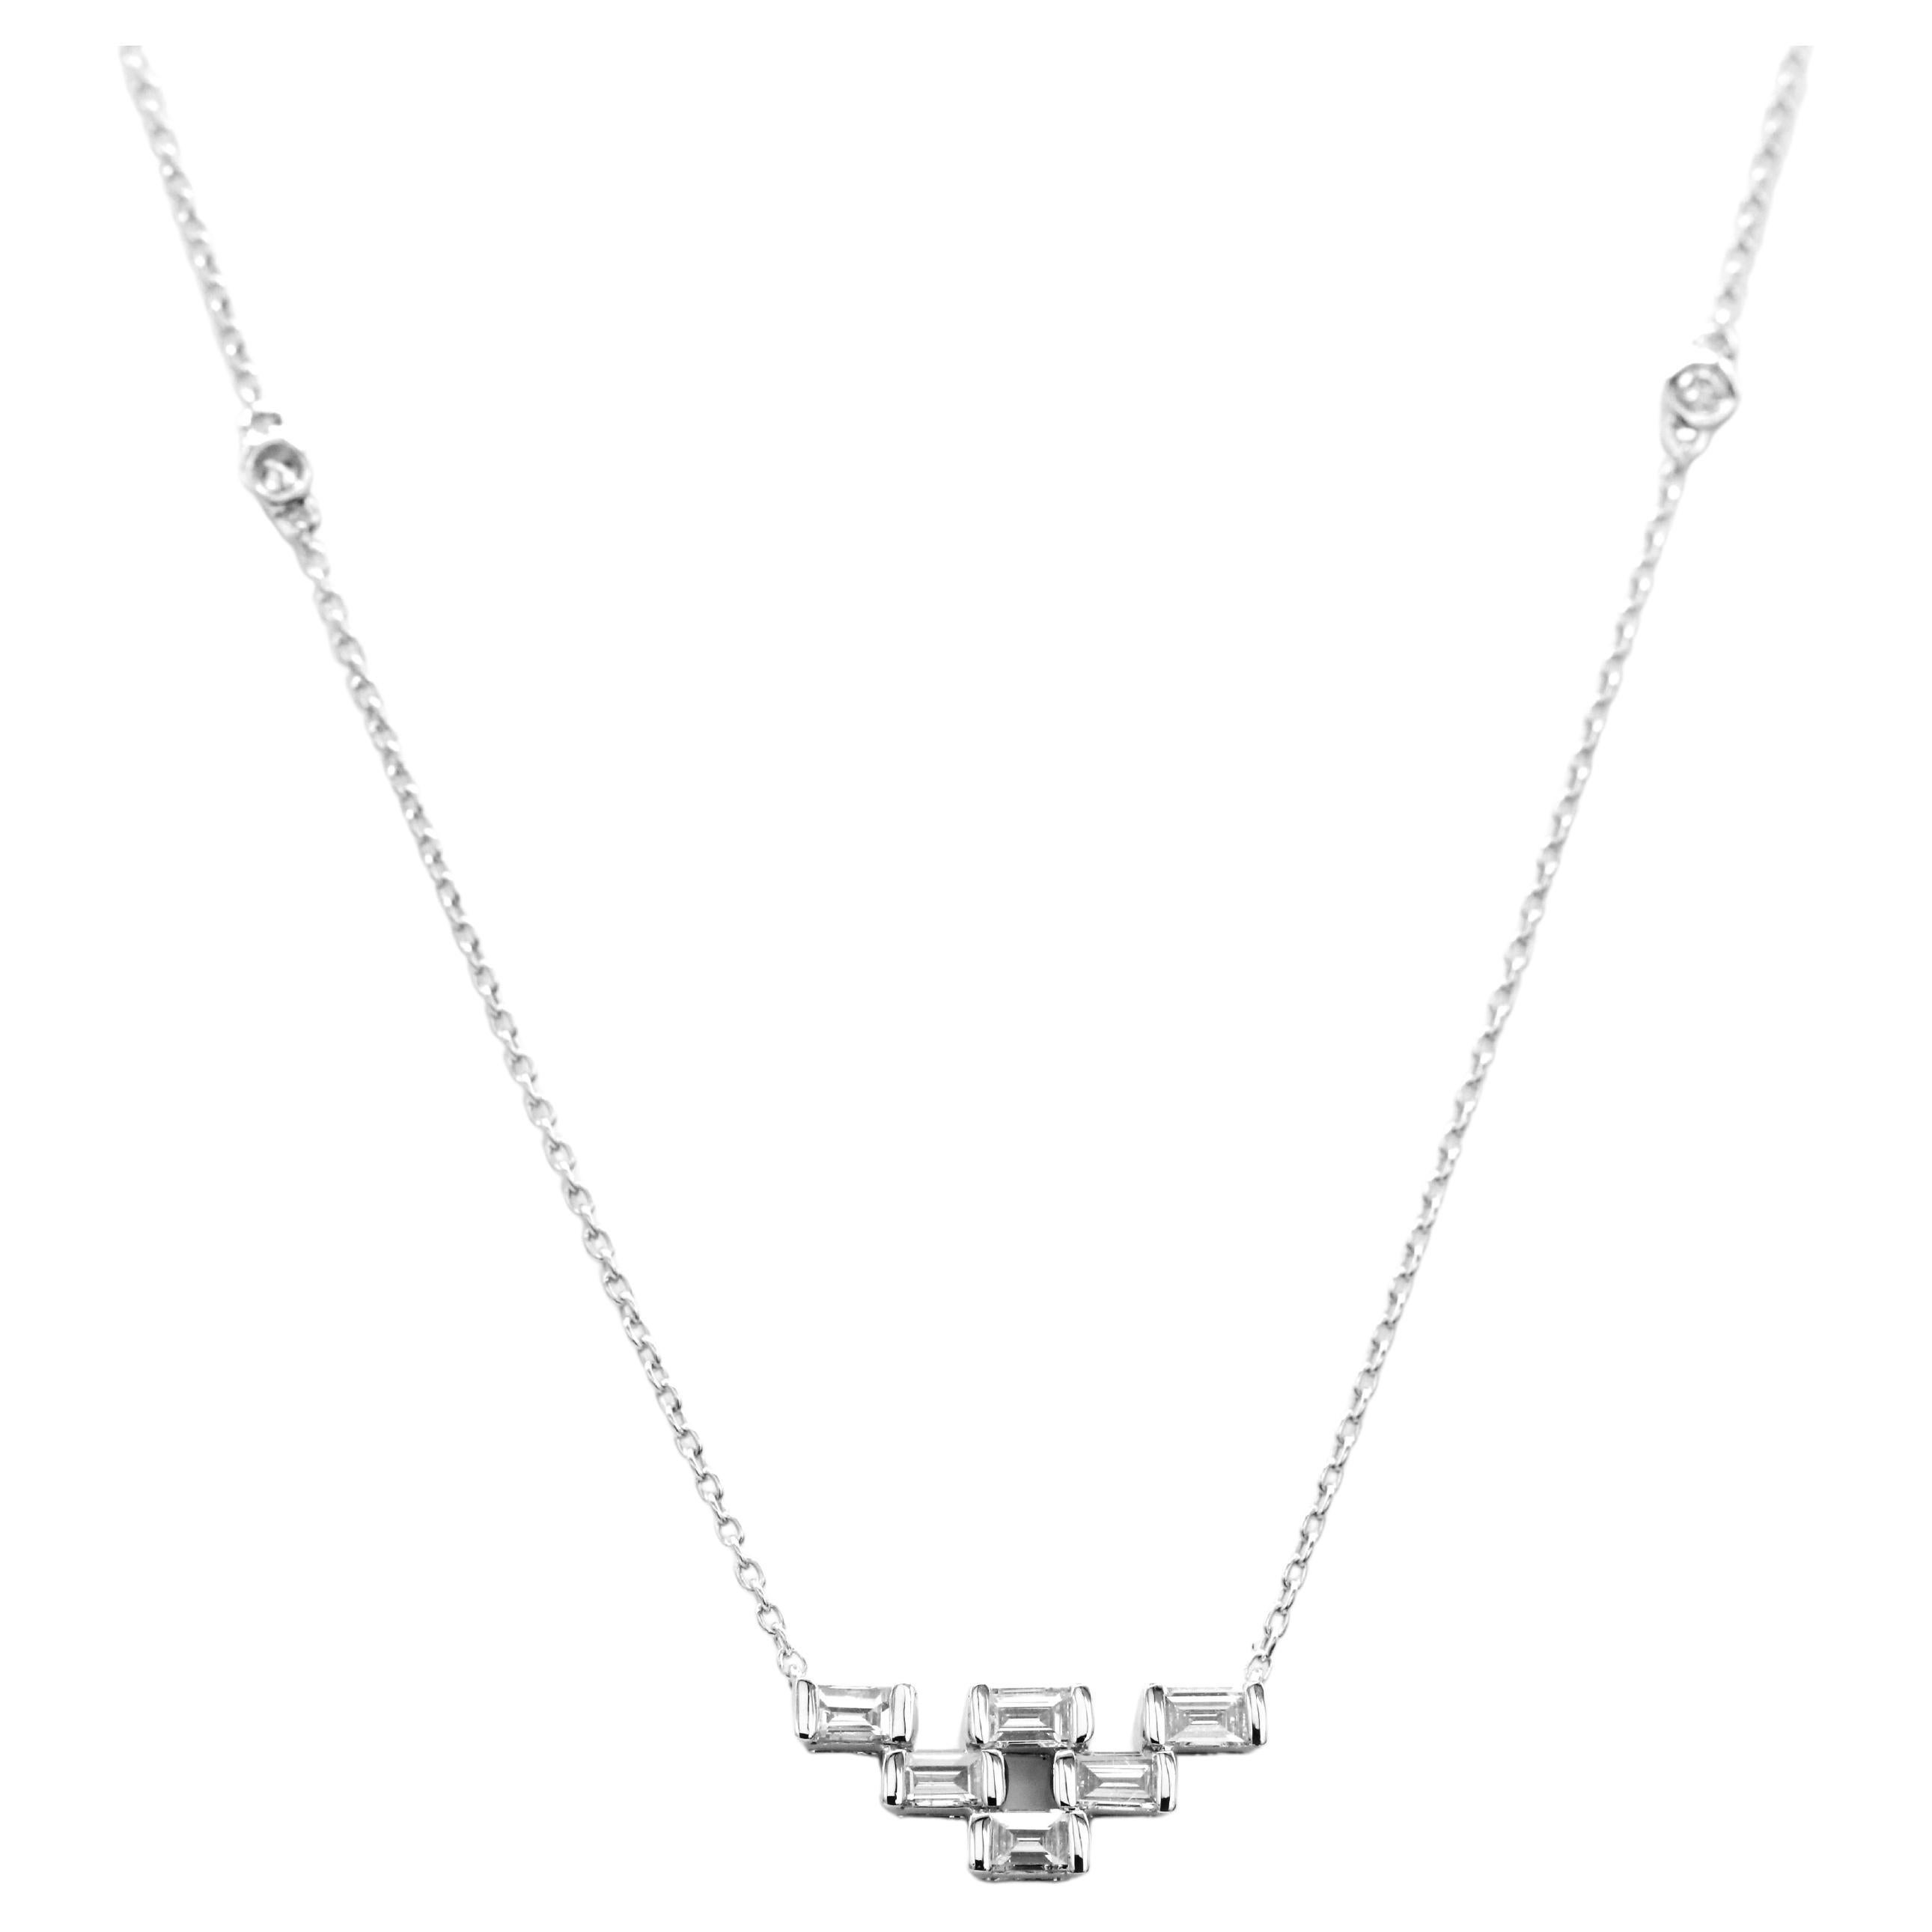 0.3 Ct White Diamond 18 K White Gold Chain Necklace For Sale